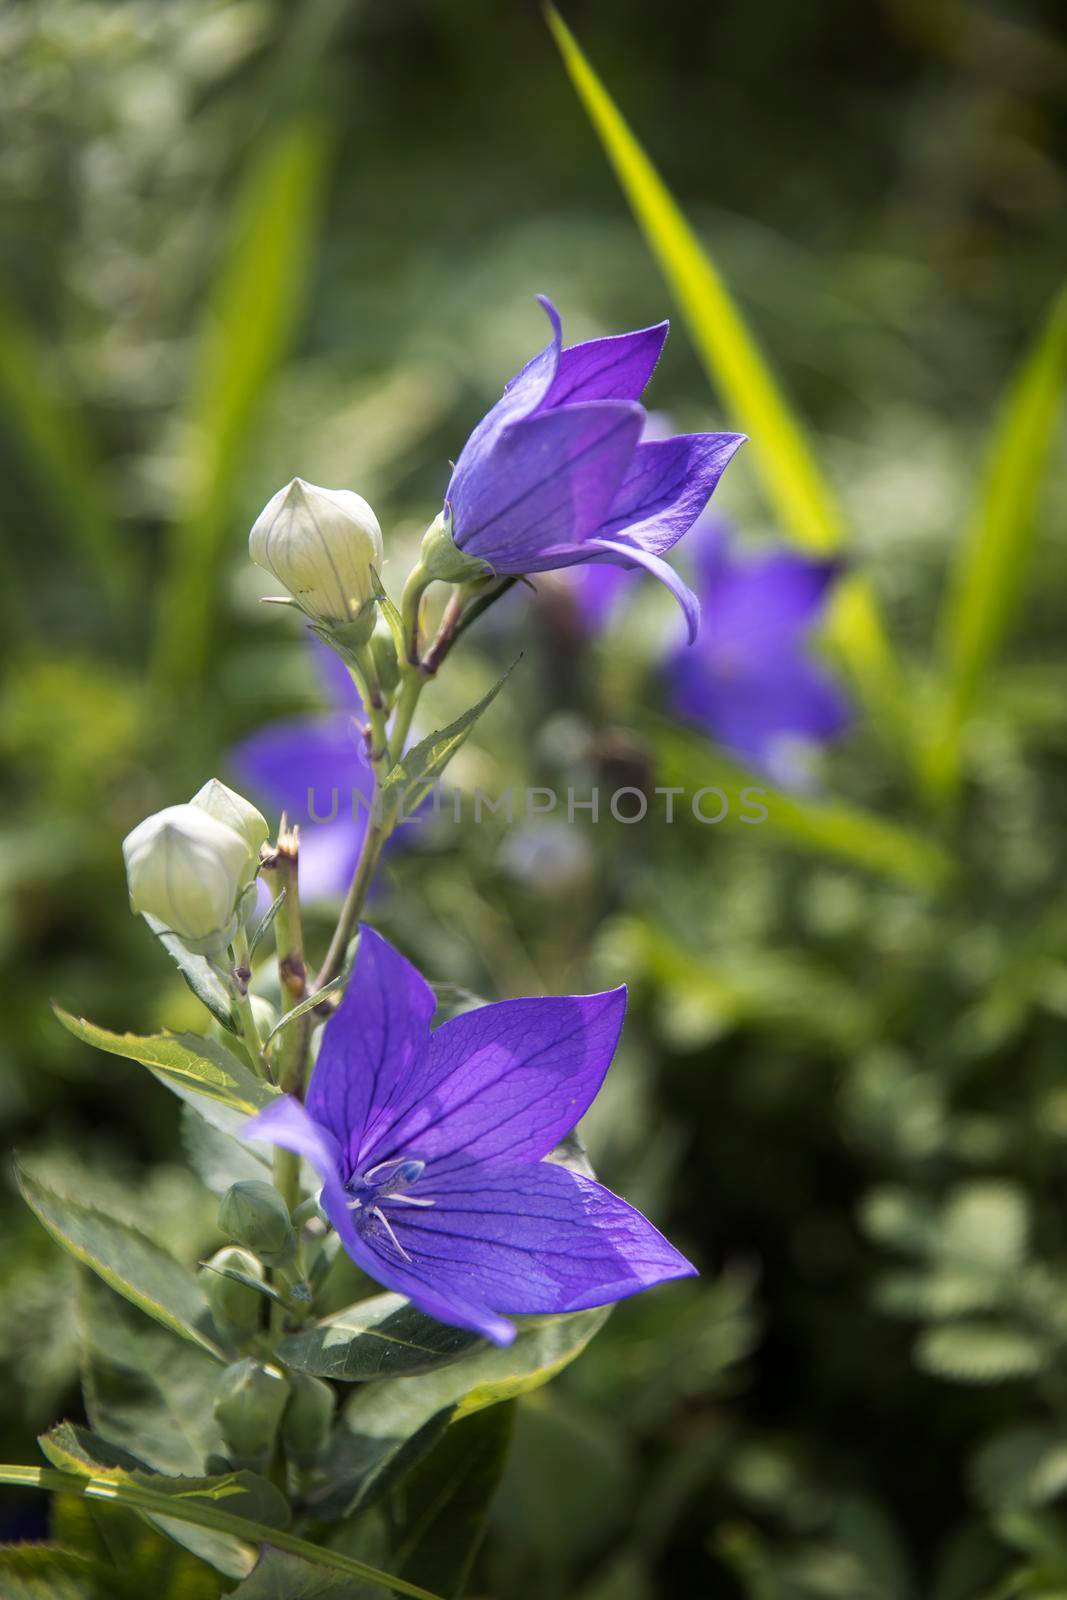 Flowers blue bell, bellflower, ?ampanula, close-up. Flowering blue platycodon in the garden. by elenarostunova